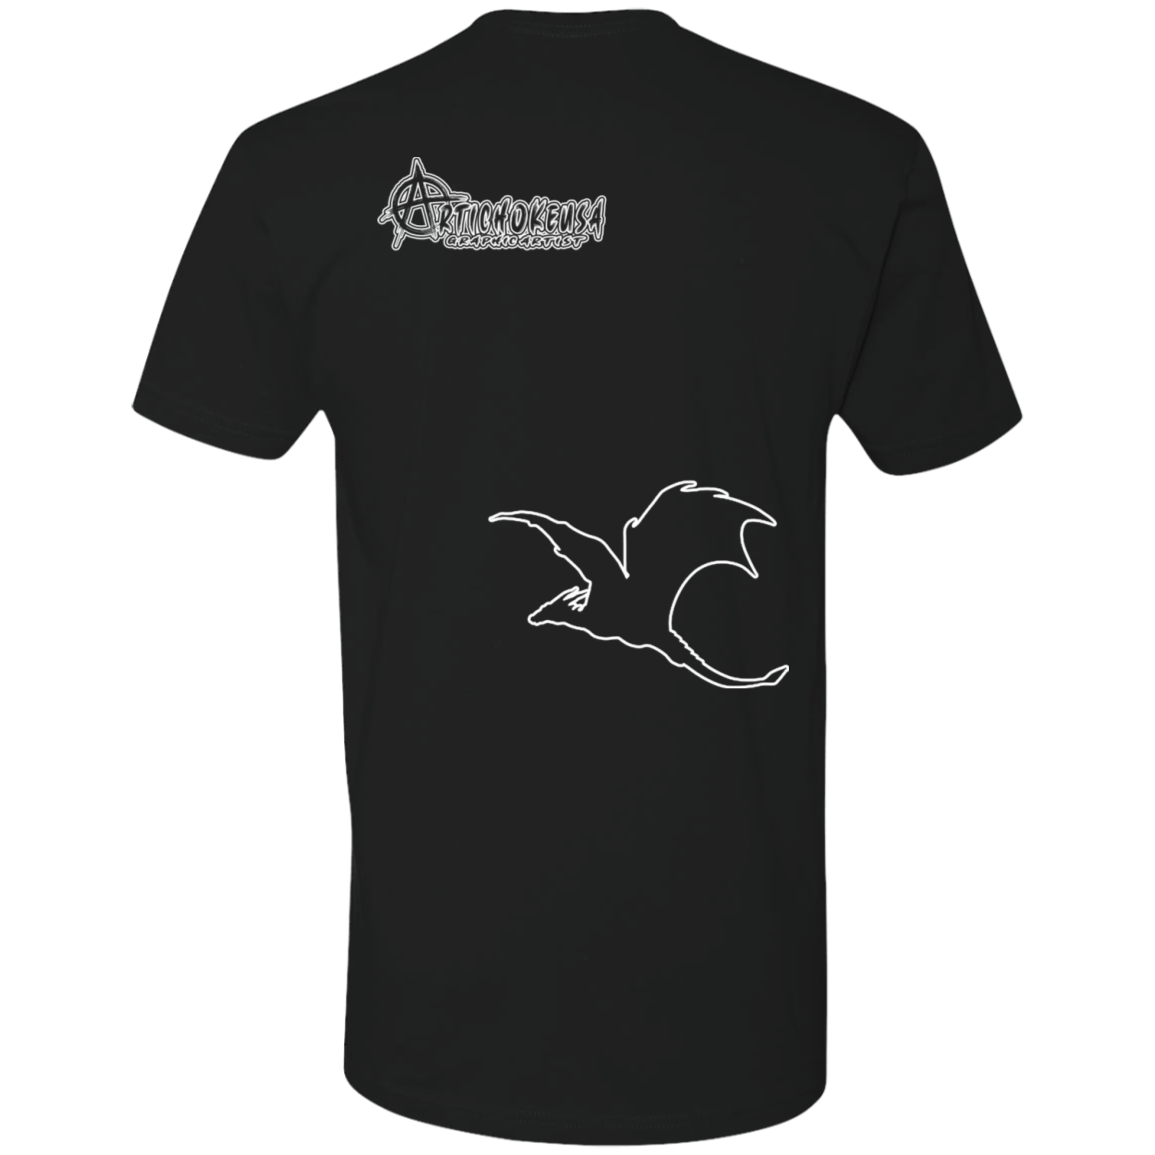 ArtichokeUSA Custom Design #16. Dracarys That Shit Up. Game of Thrones Fan Art. Ultra Soft Cotton T-Shirt